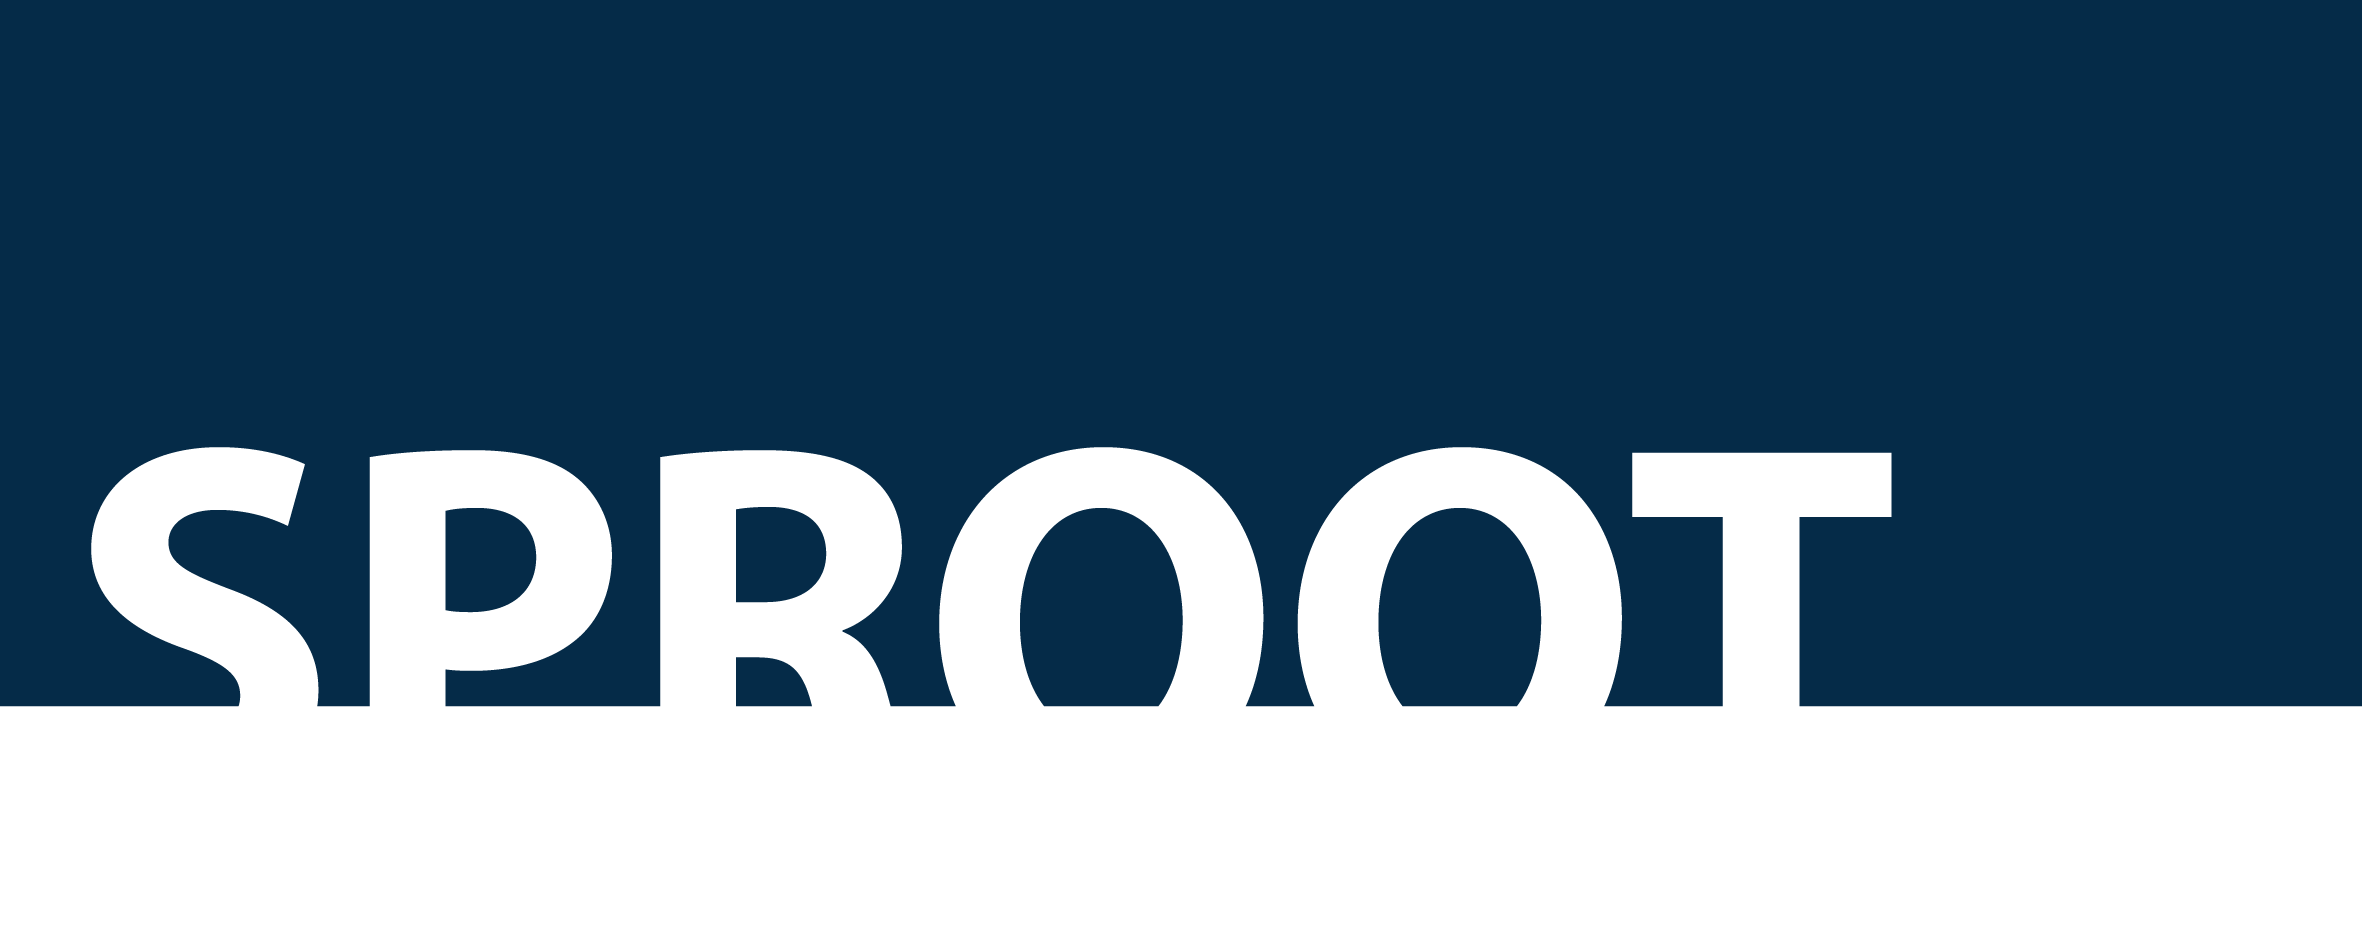 Sproot logo